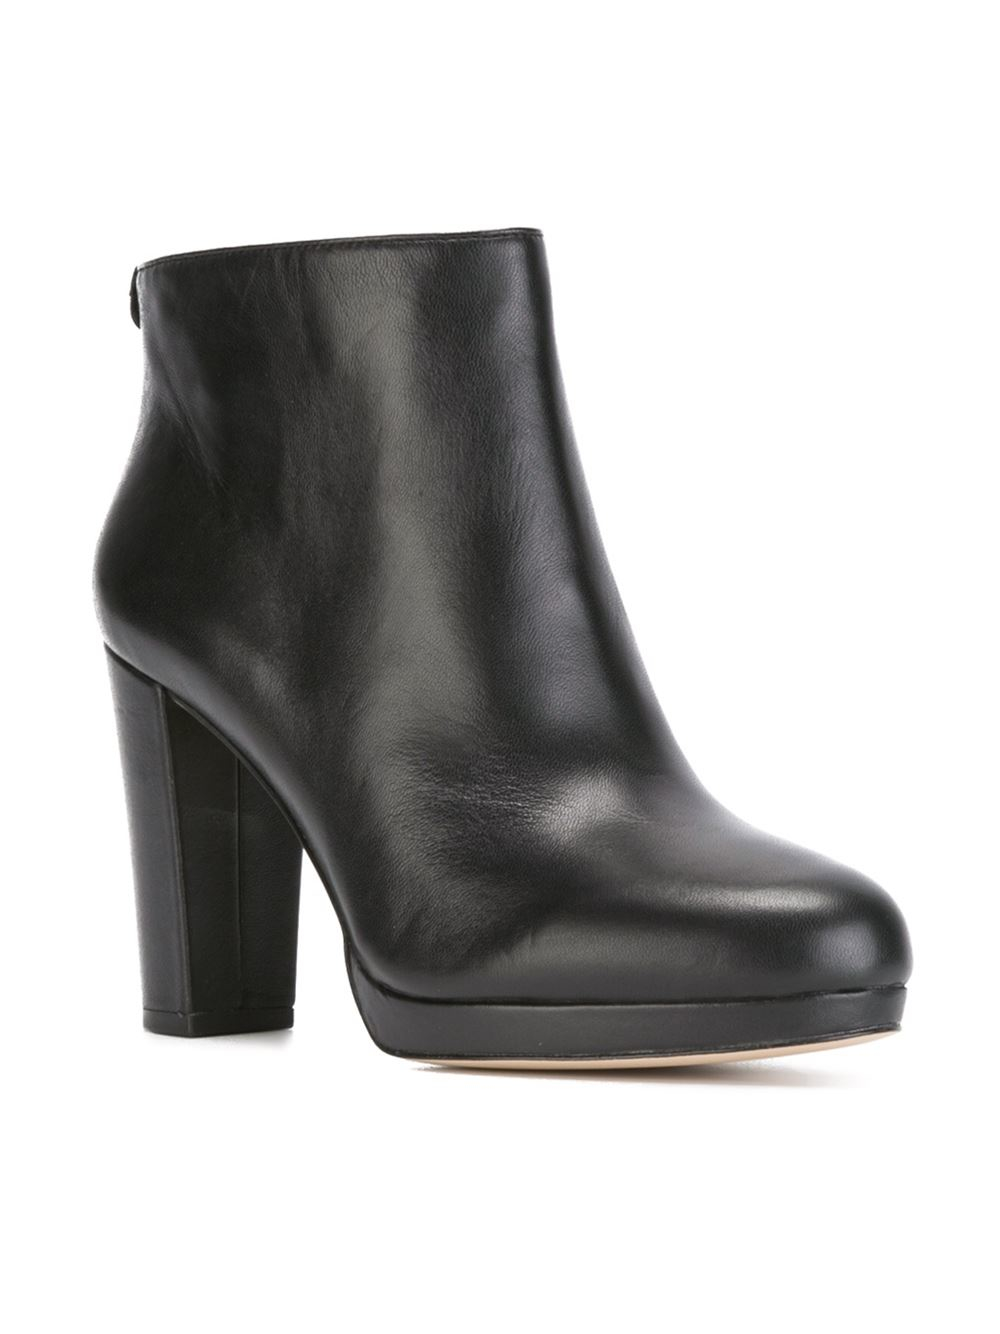 Lyst - Michael Michael Kors Chunky Heel Boots in Black